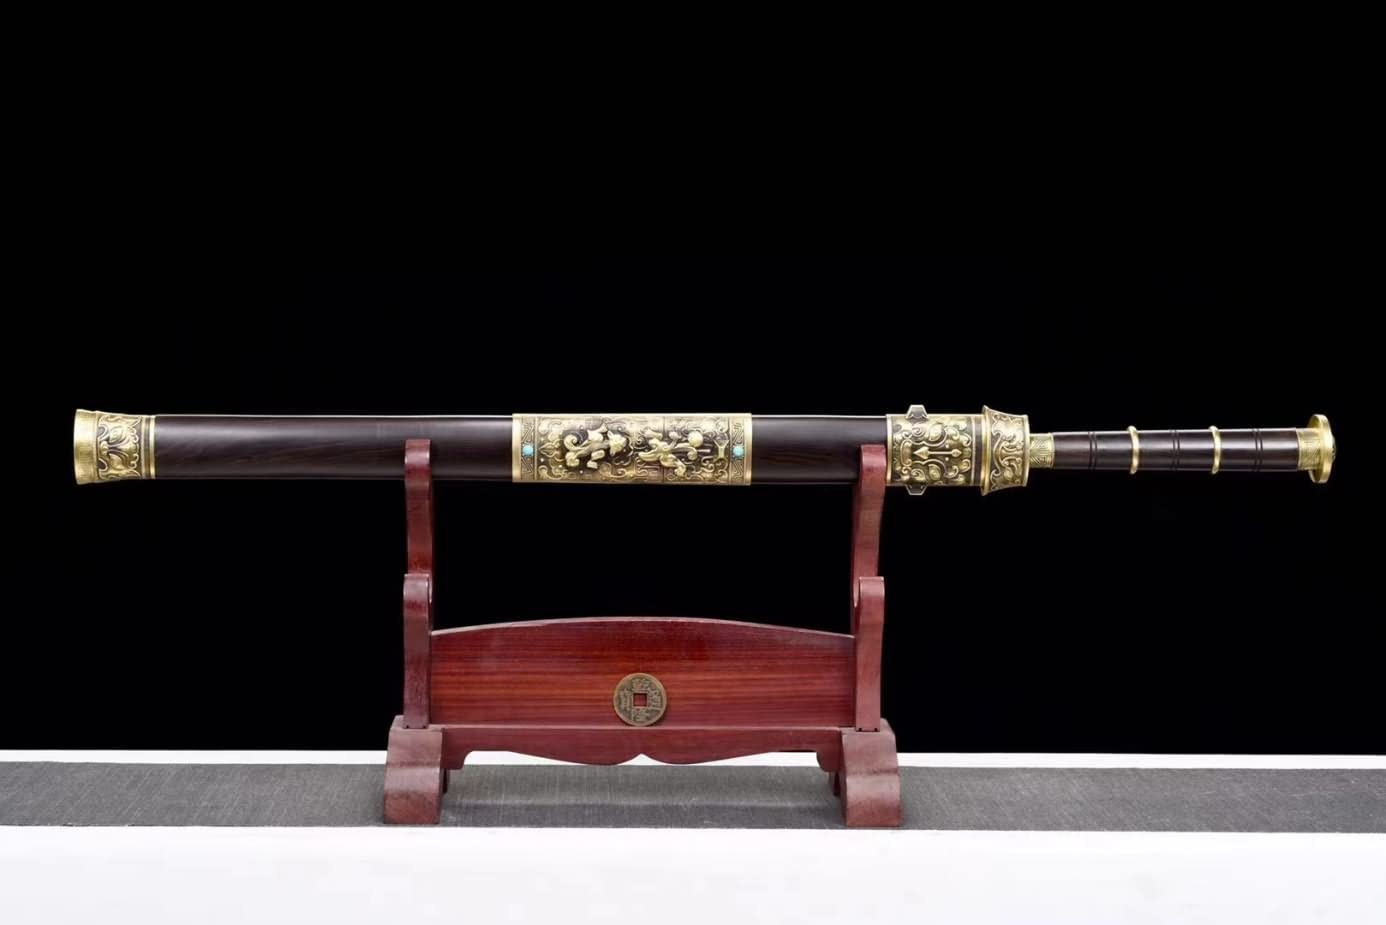 Three Kingdoms Sword,Forged Damascus Blades,Brass Fittings,Handmade Art